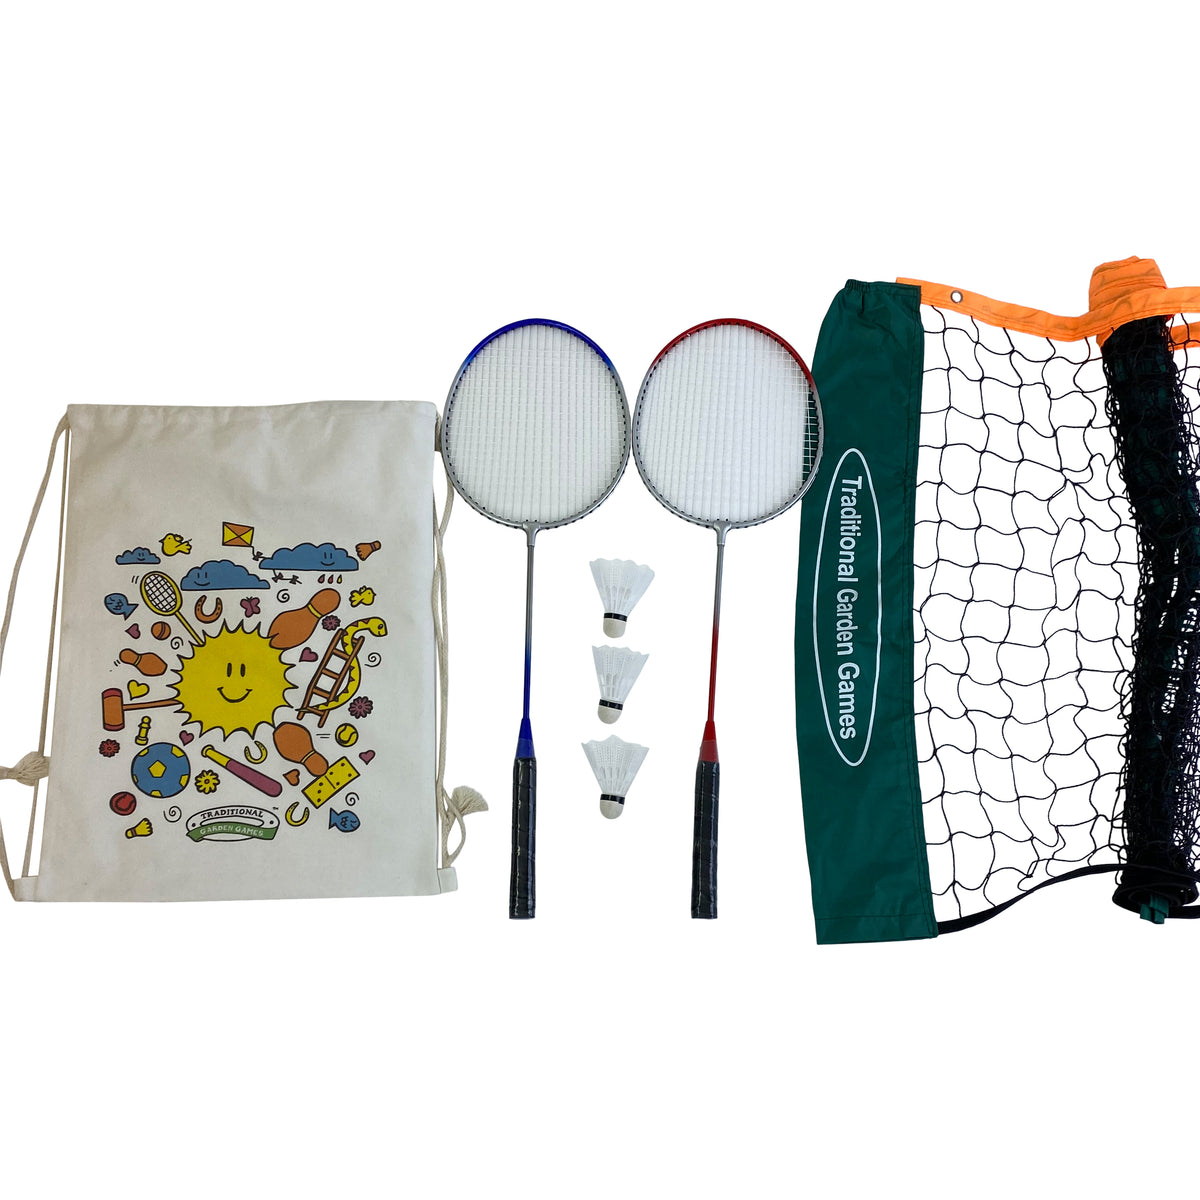 Premium Badminton Set with 5m Net